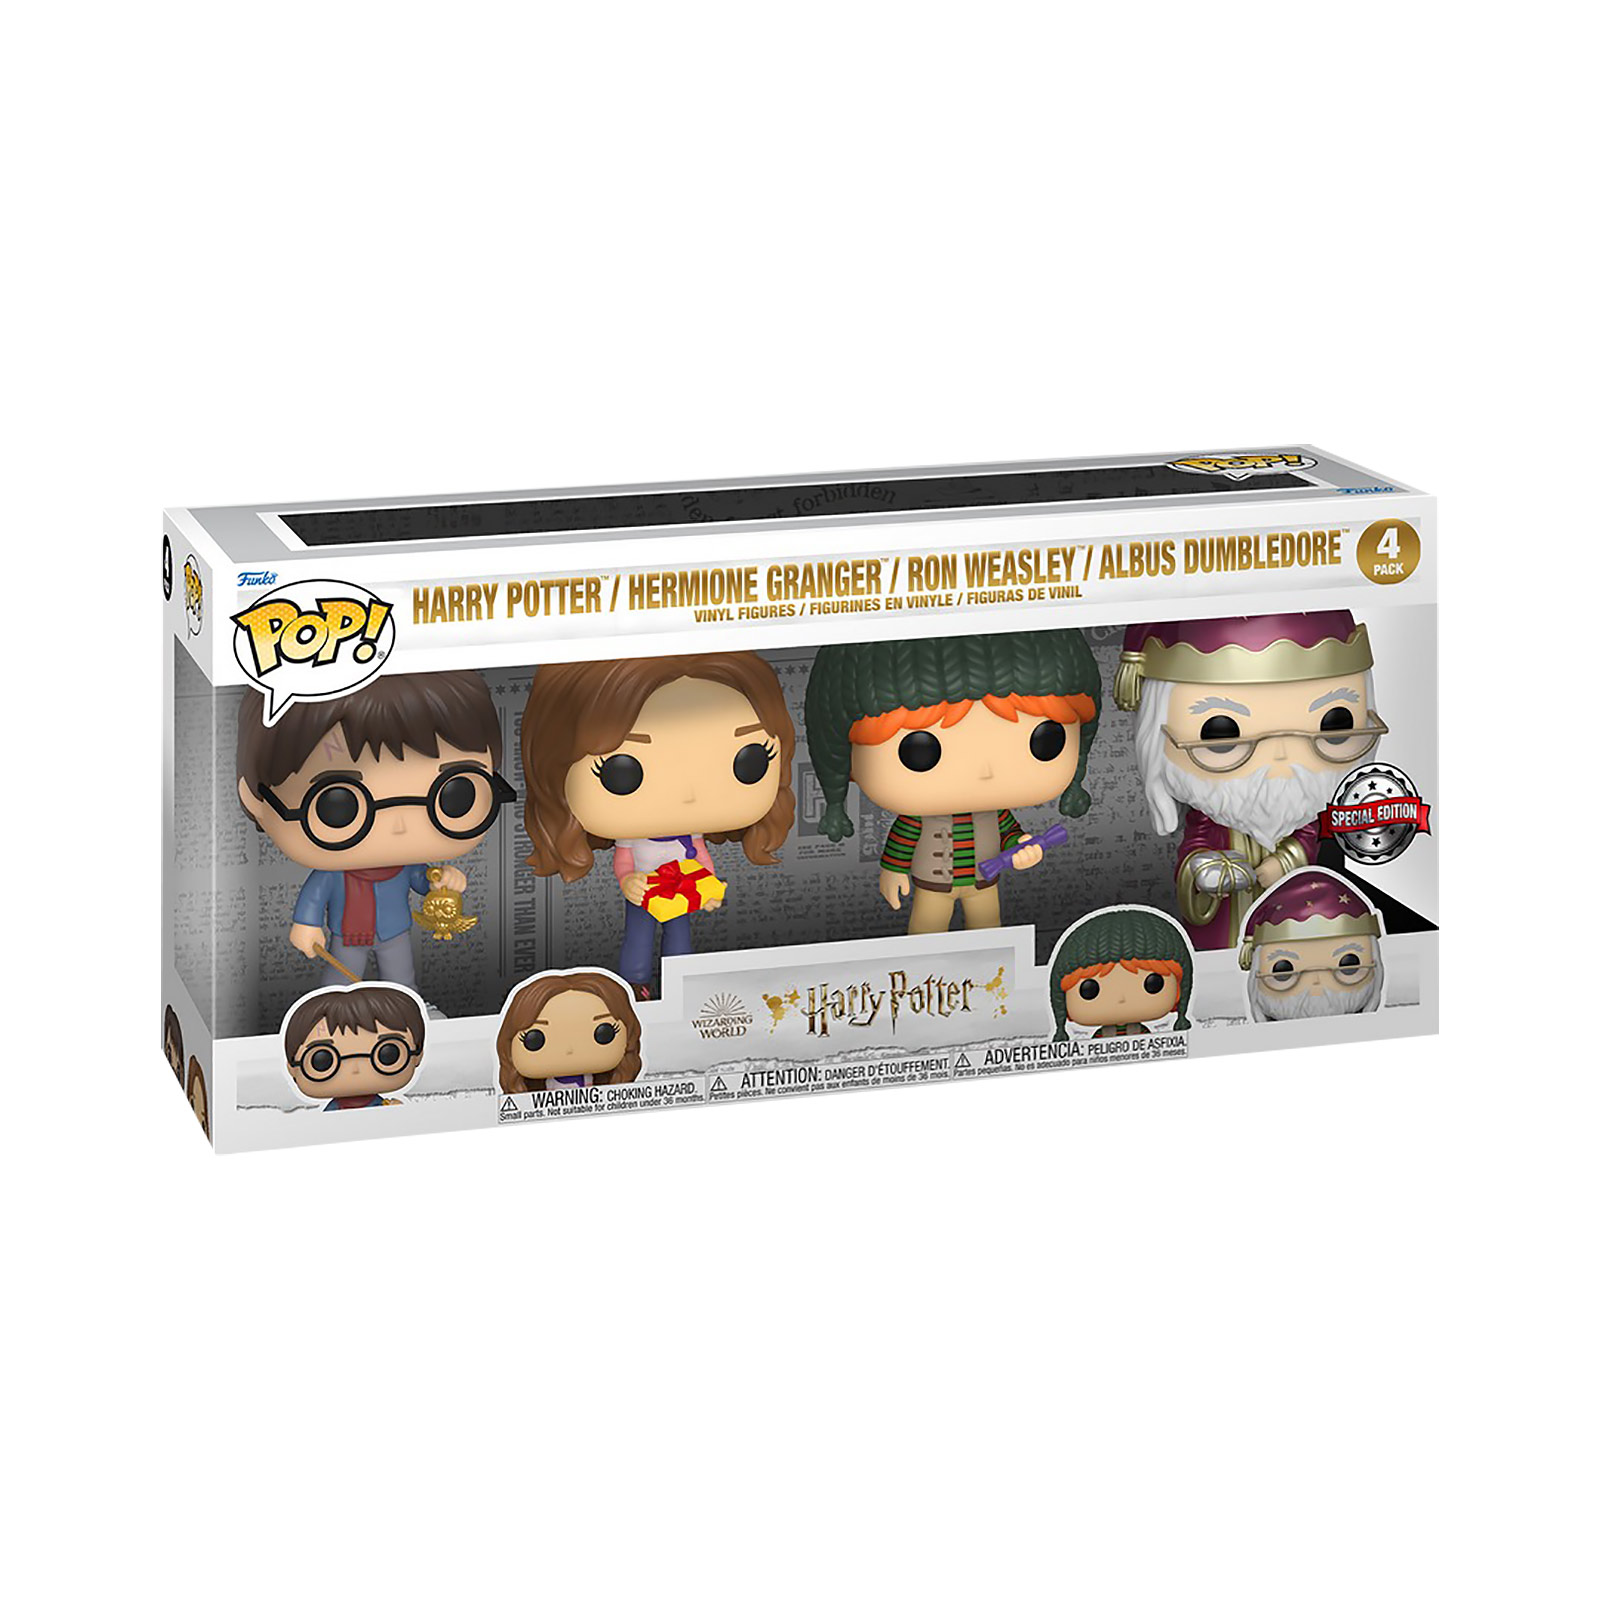 Harry Potter - Holiday Funko Pop Figures Set